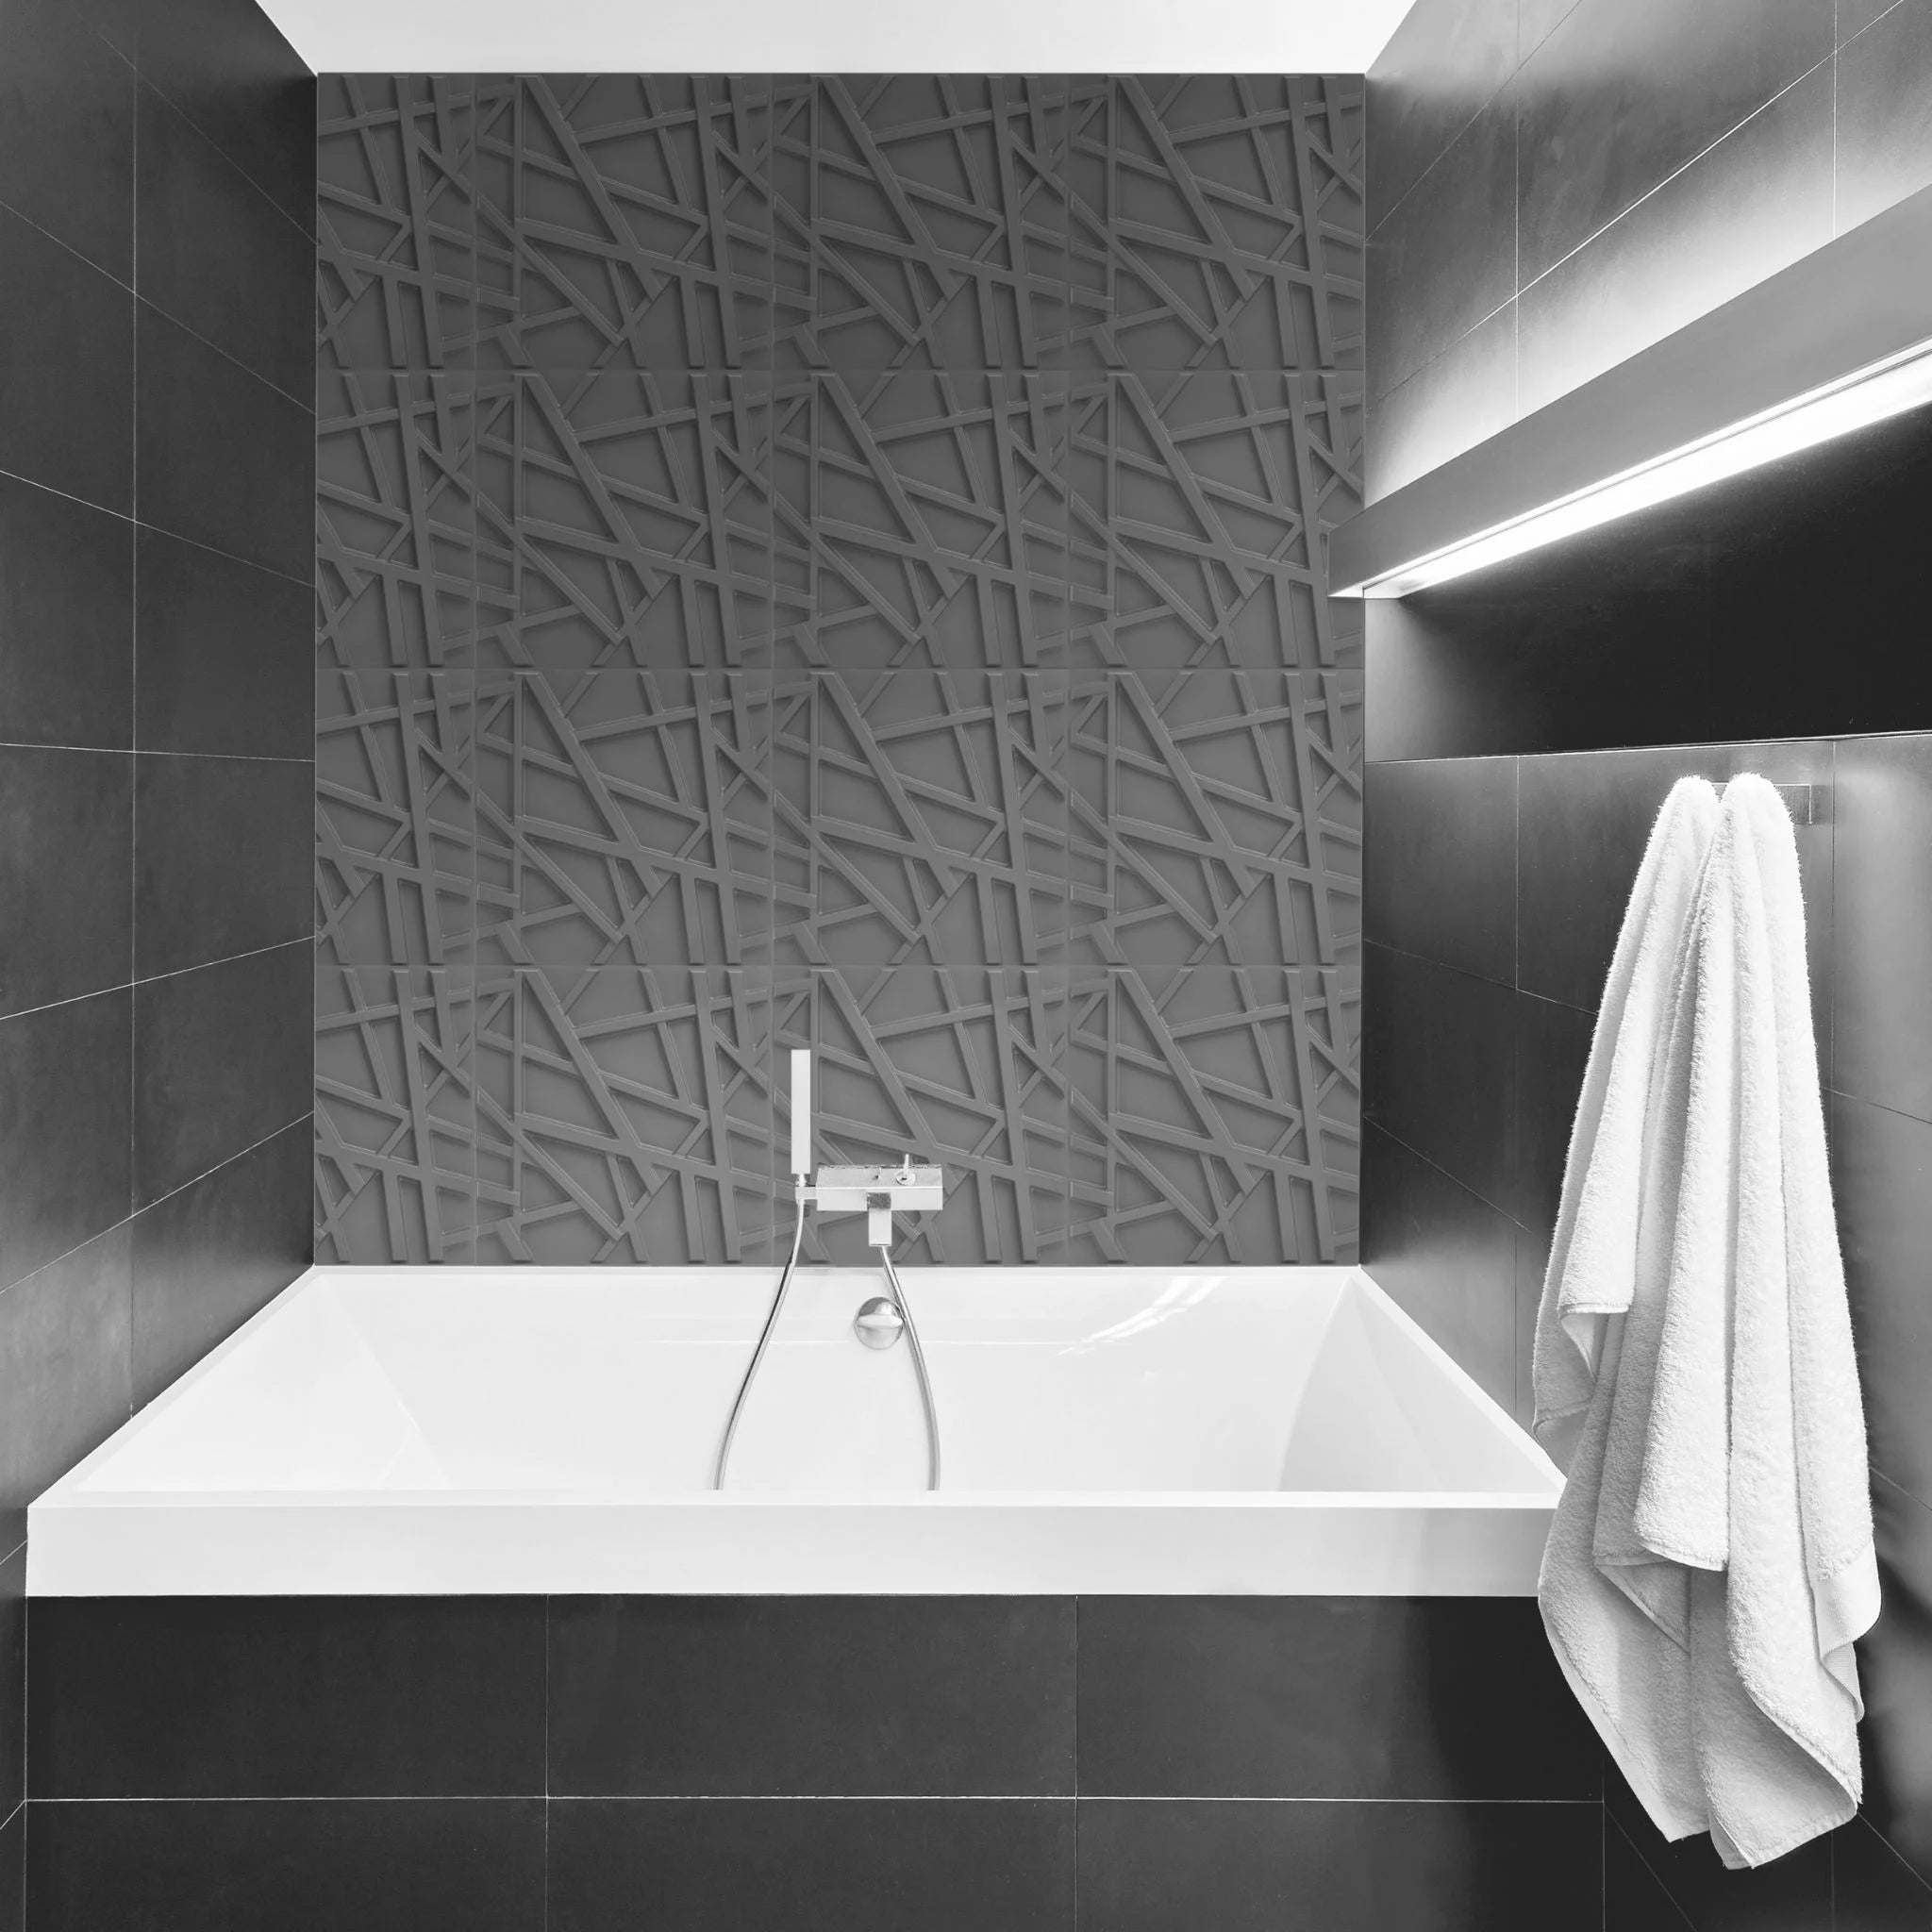 Grey PVC wall panel with crisscross design in stylish bath room